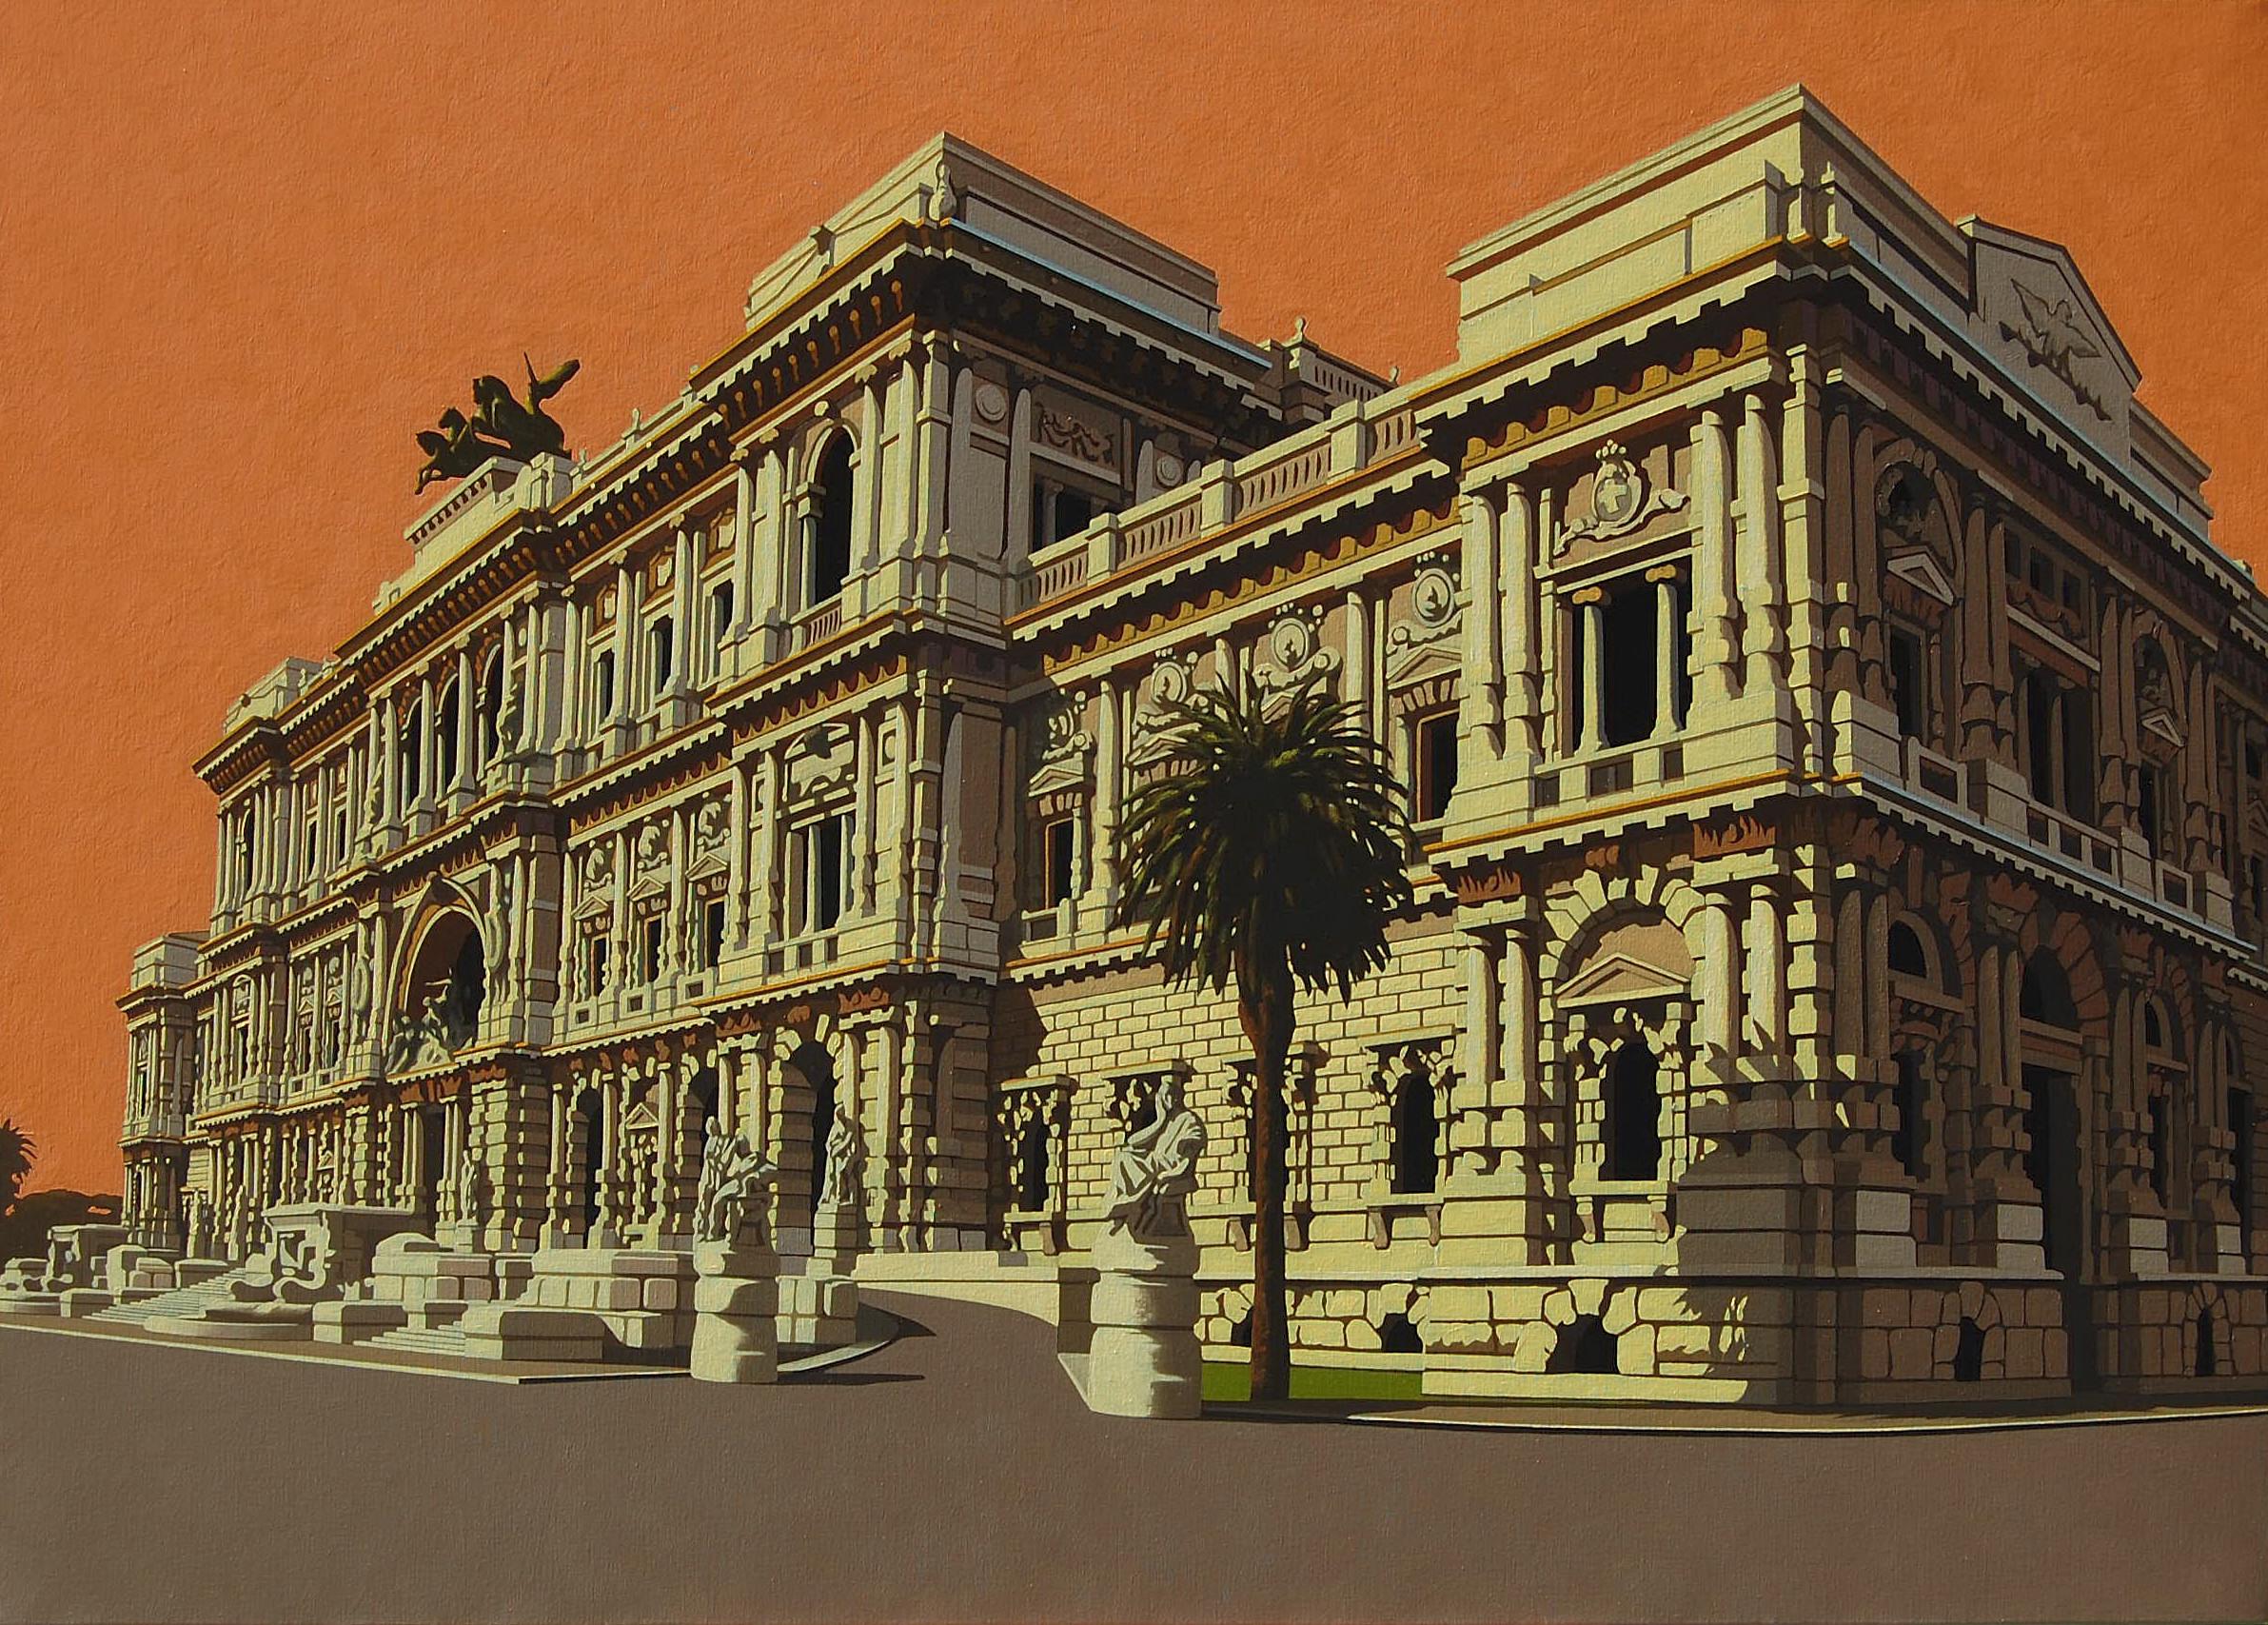 Mauro Reggio Landscape Painting - Rome hystorical palace, orange view by oil contemporary italian painter Reggio